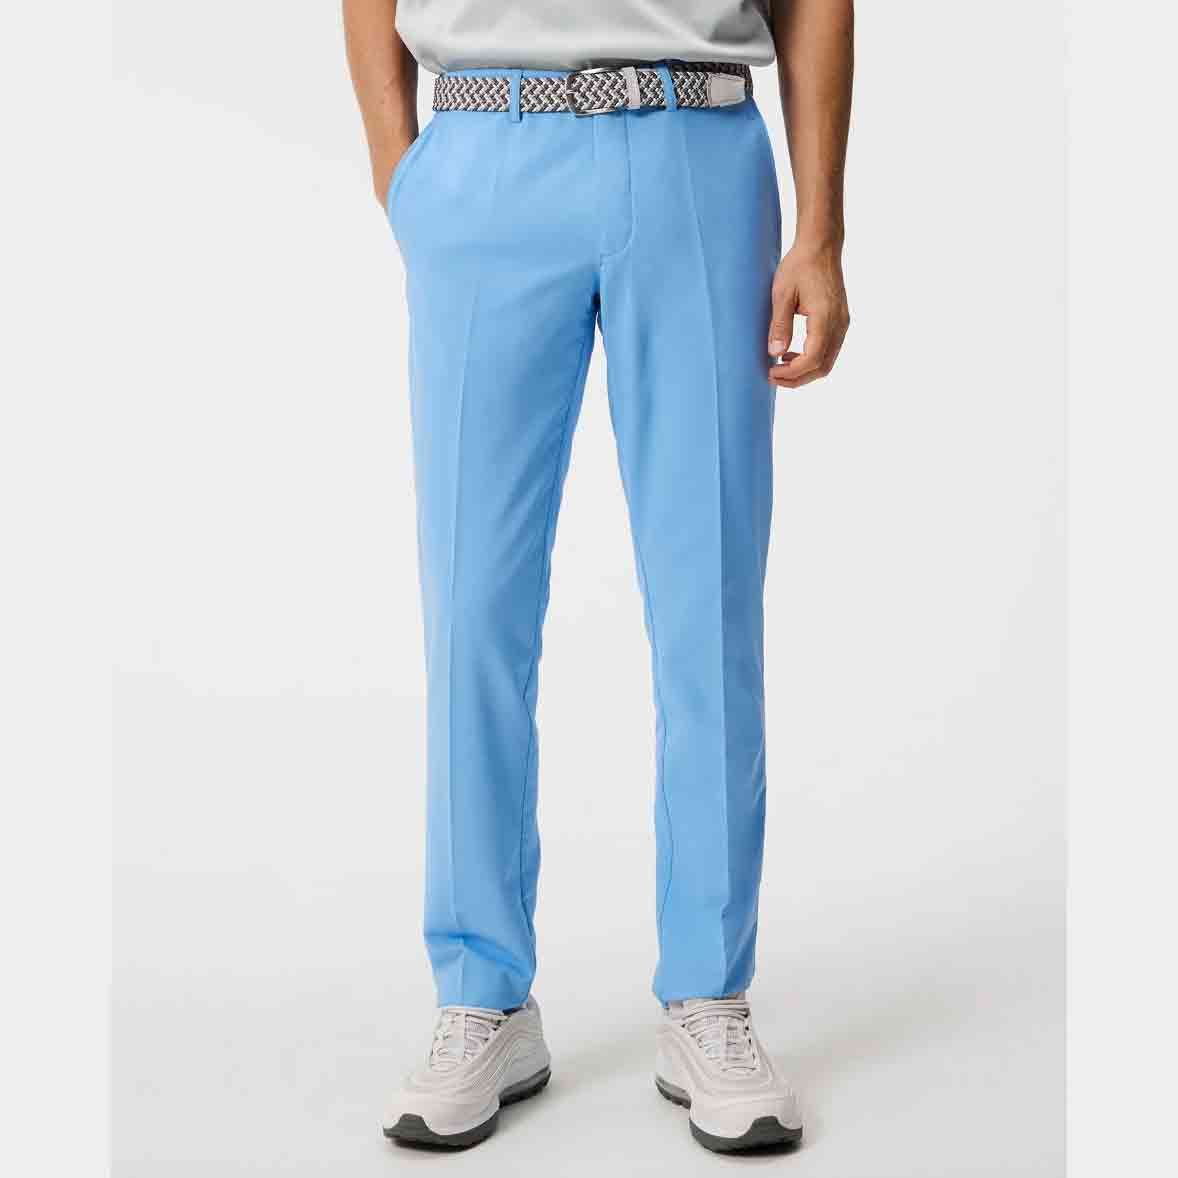 Best golf pants for fall 2023: Men's golf pants 2023